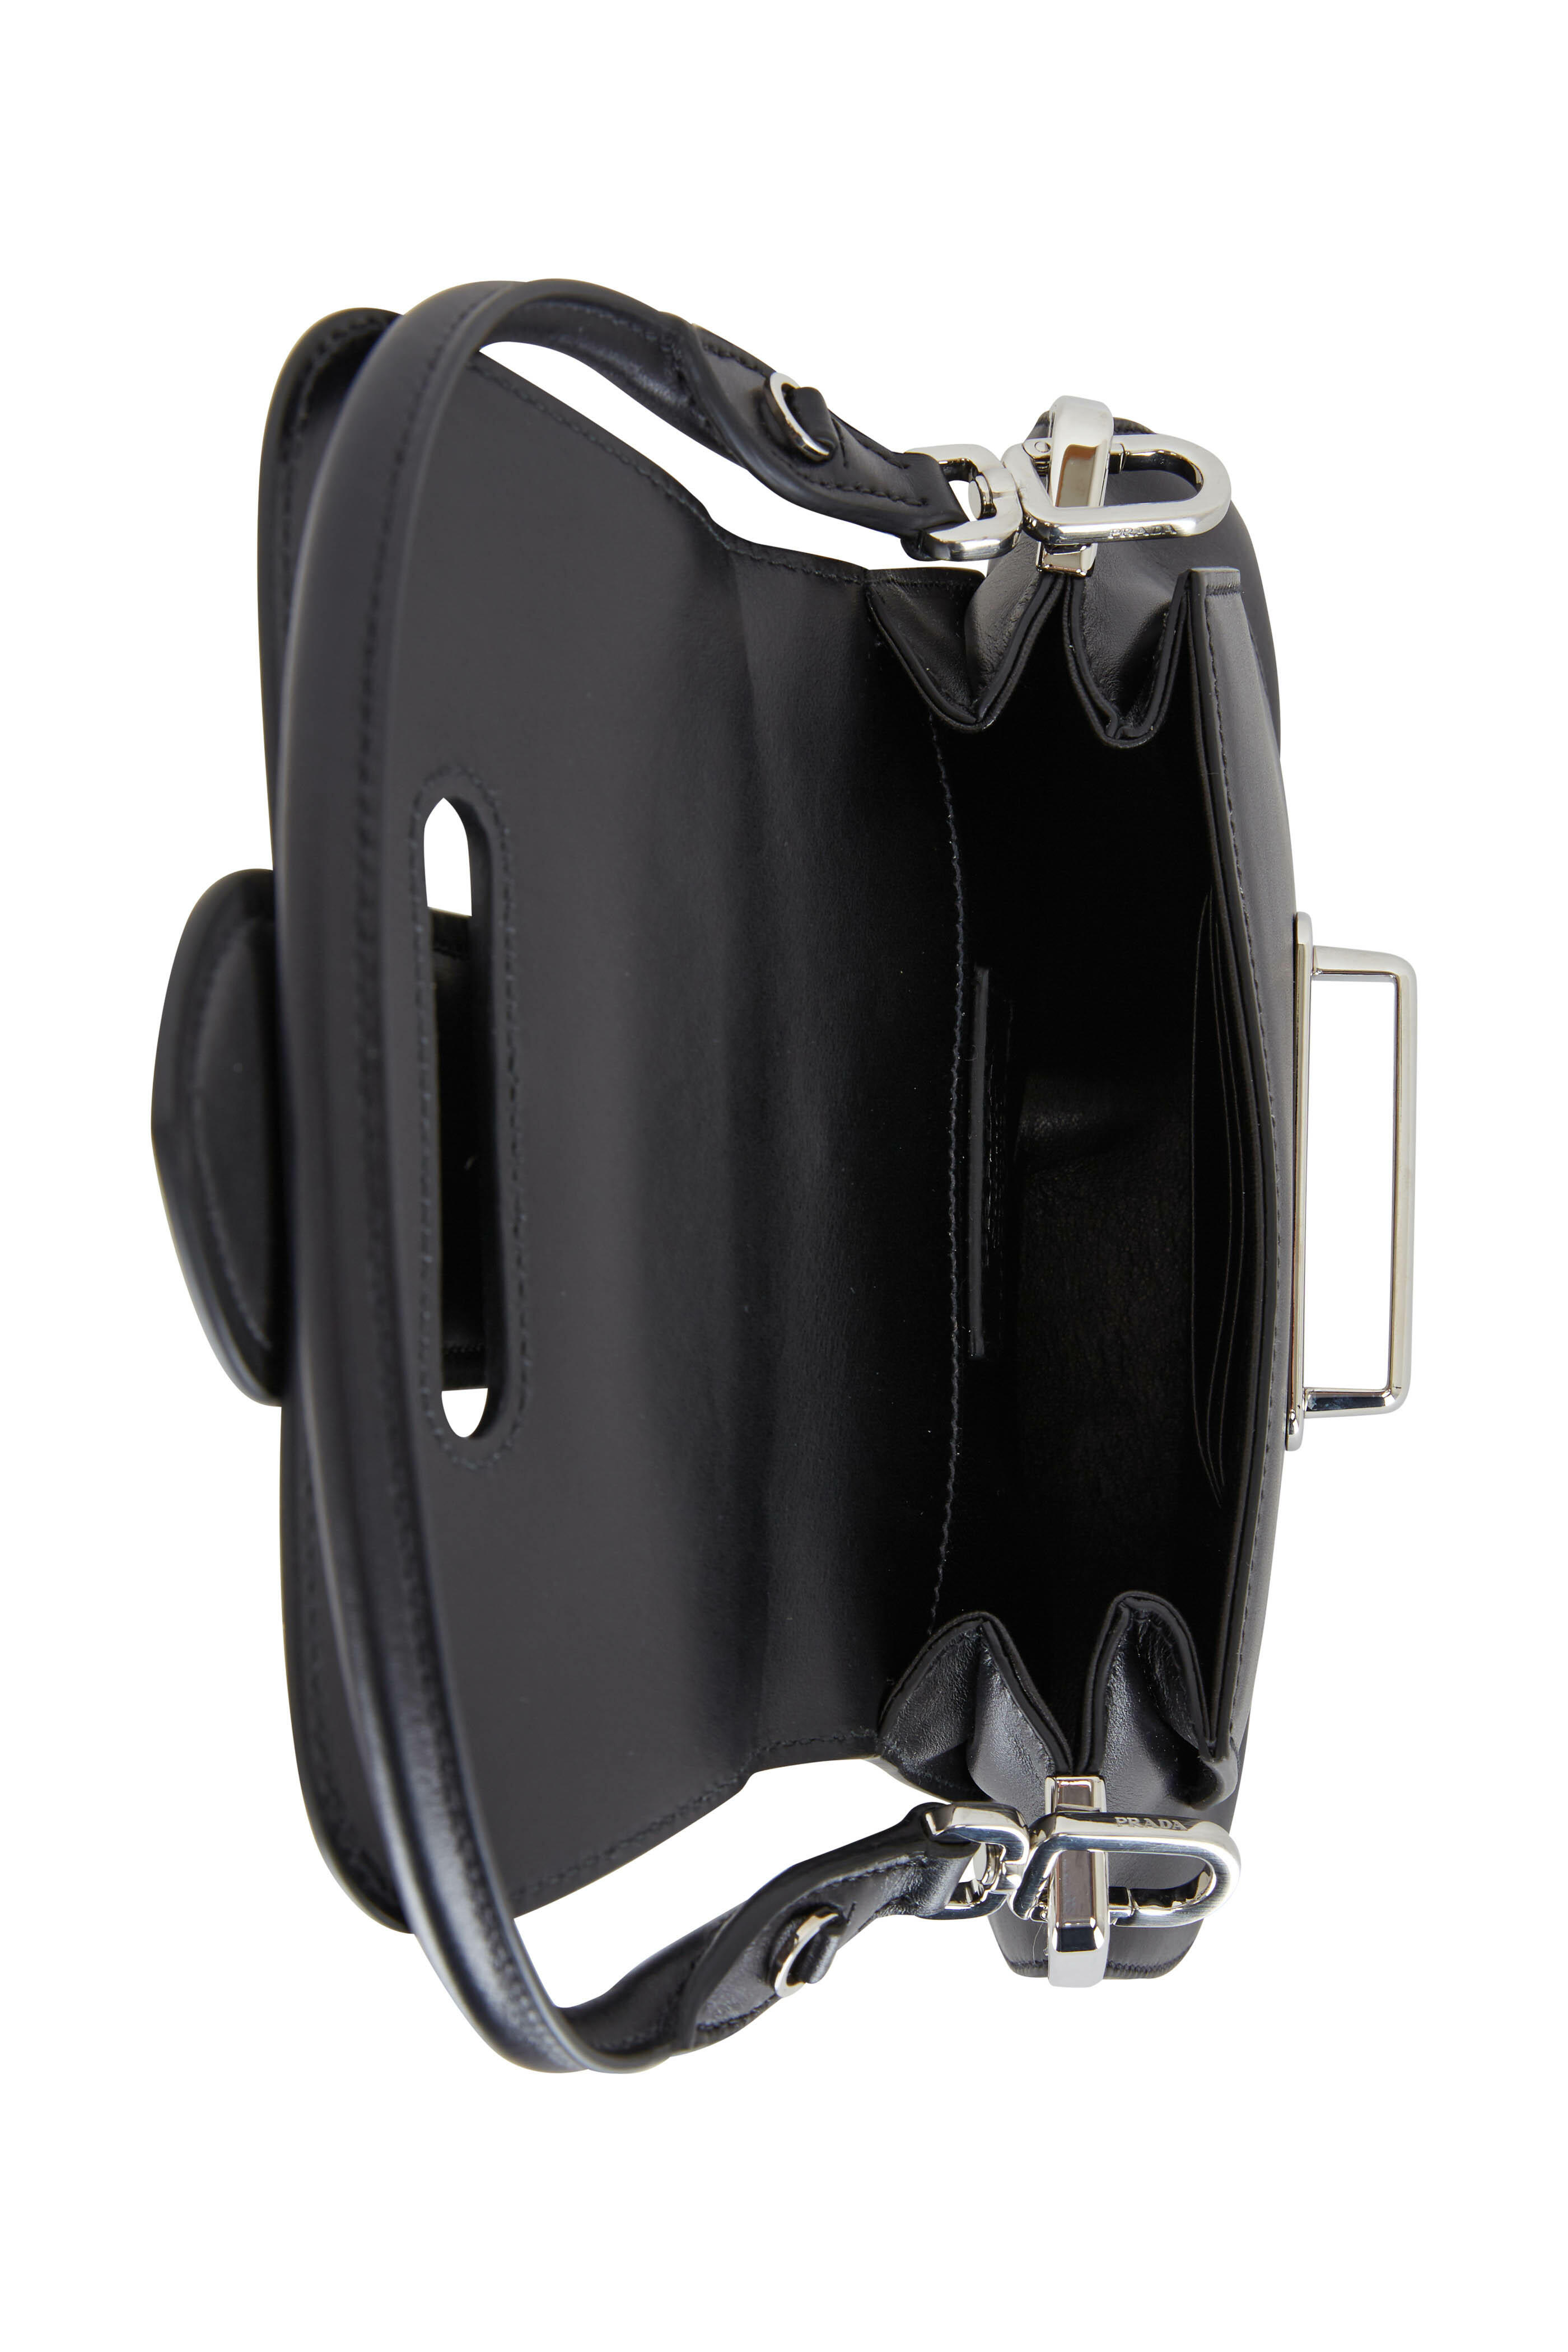 Prada Women's Black Double Saffiano Leather Mini Bag | by Mitchell Stores